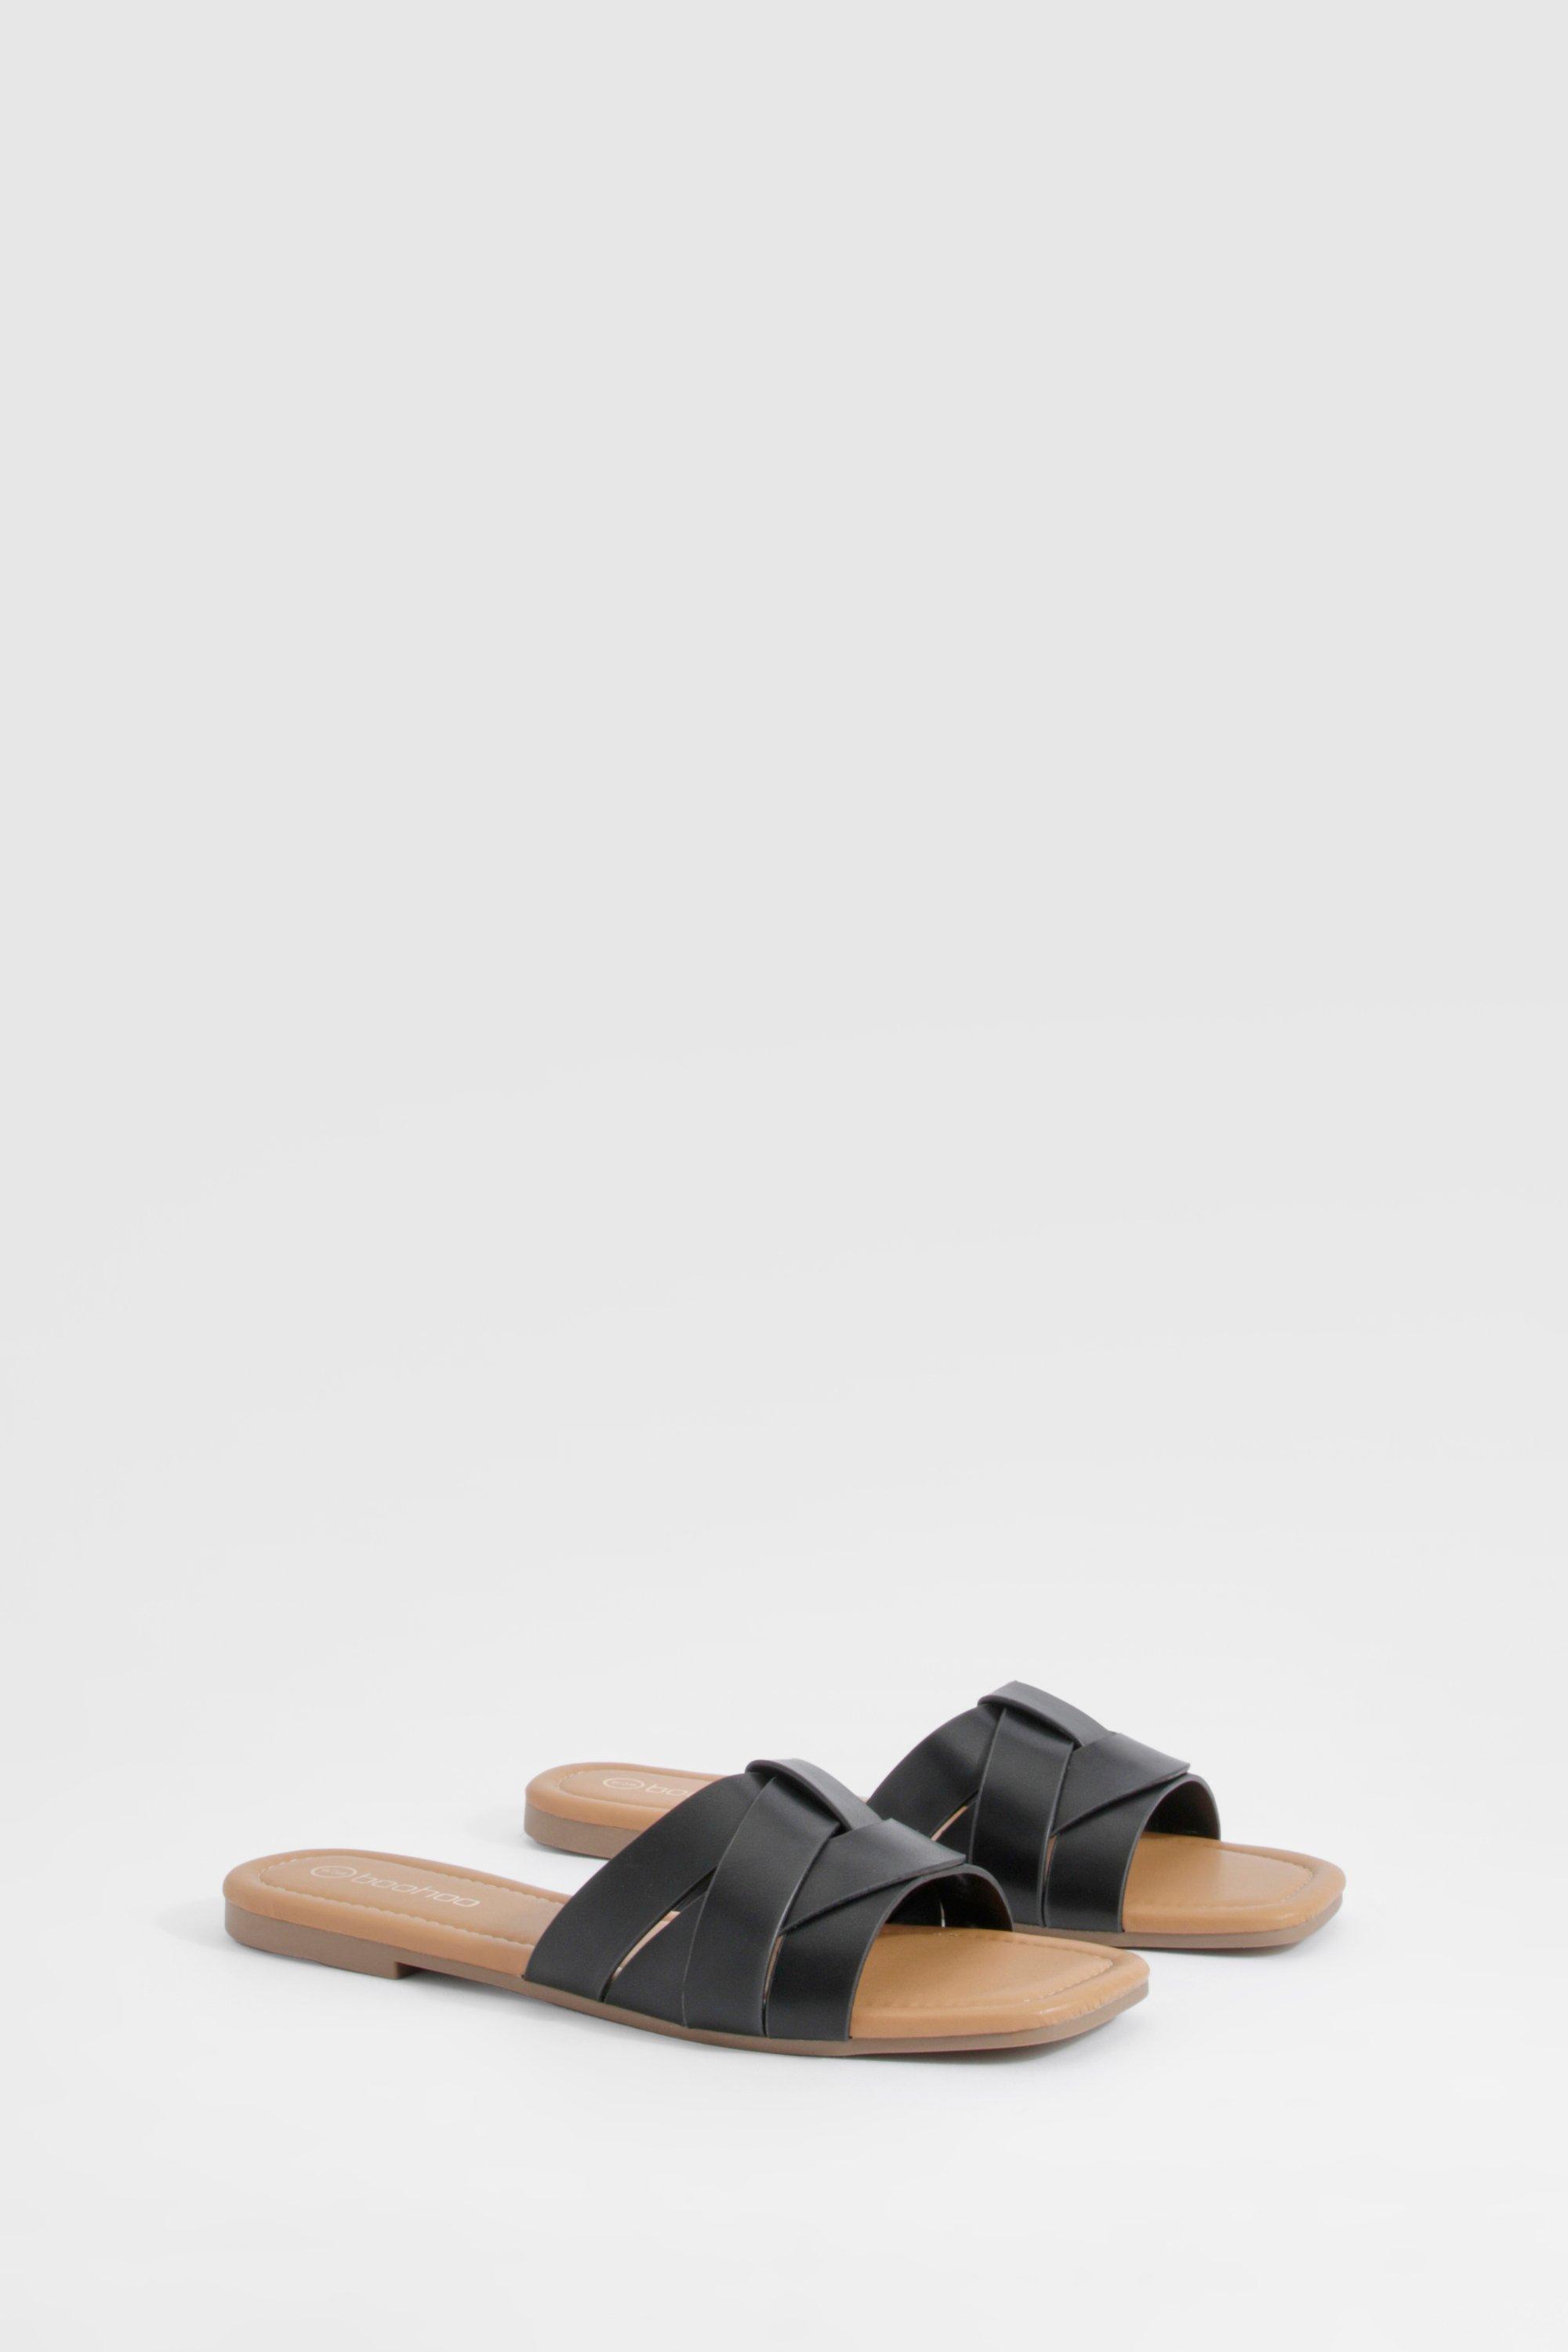 Image of Woven Basic Mule Sandals, Nero